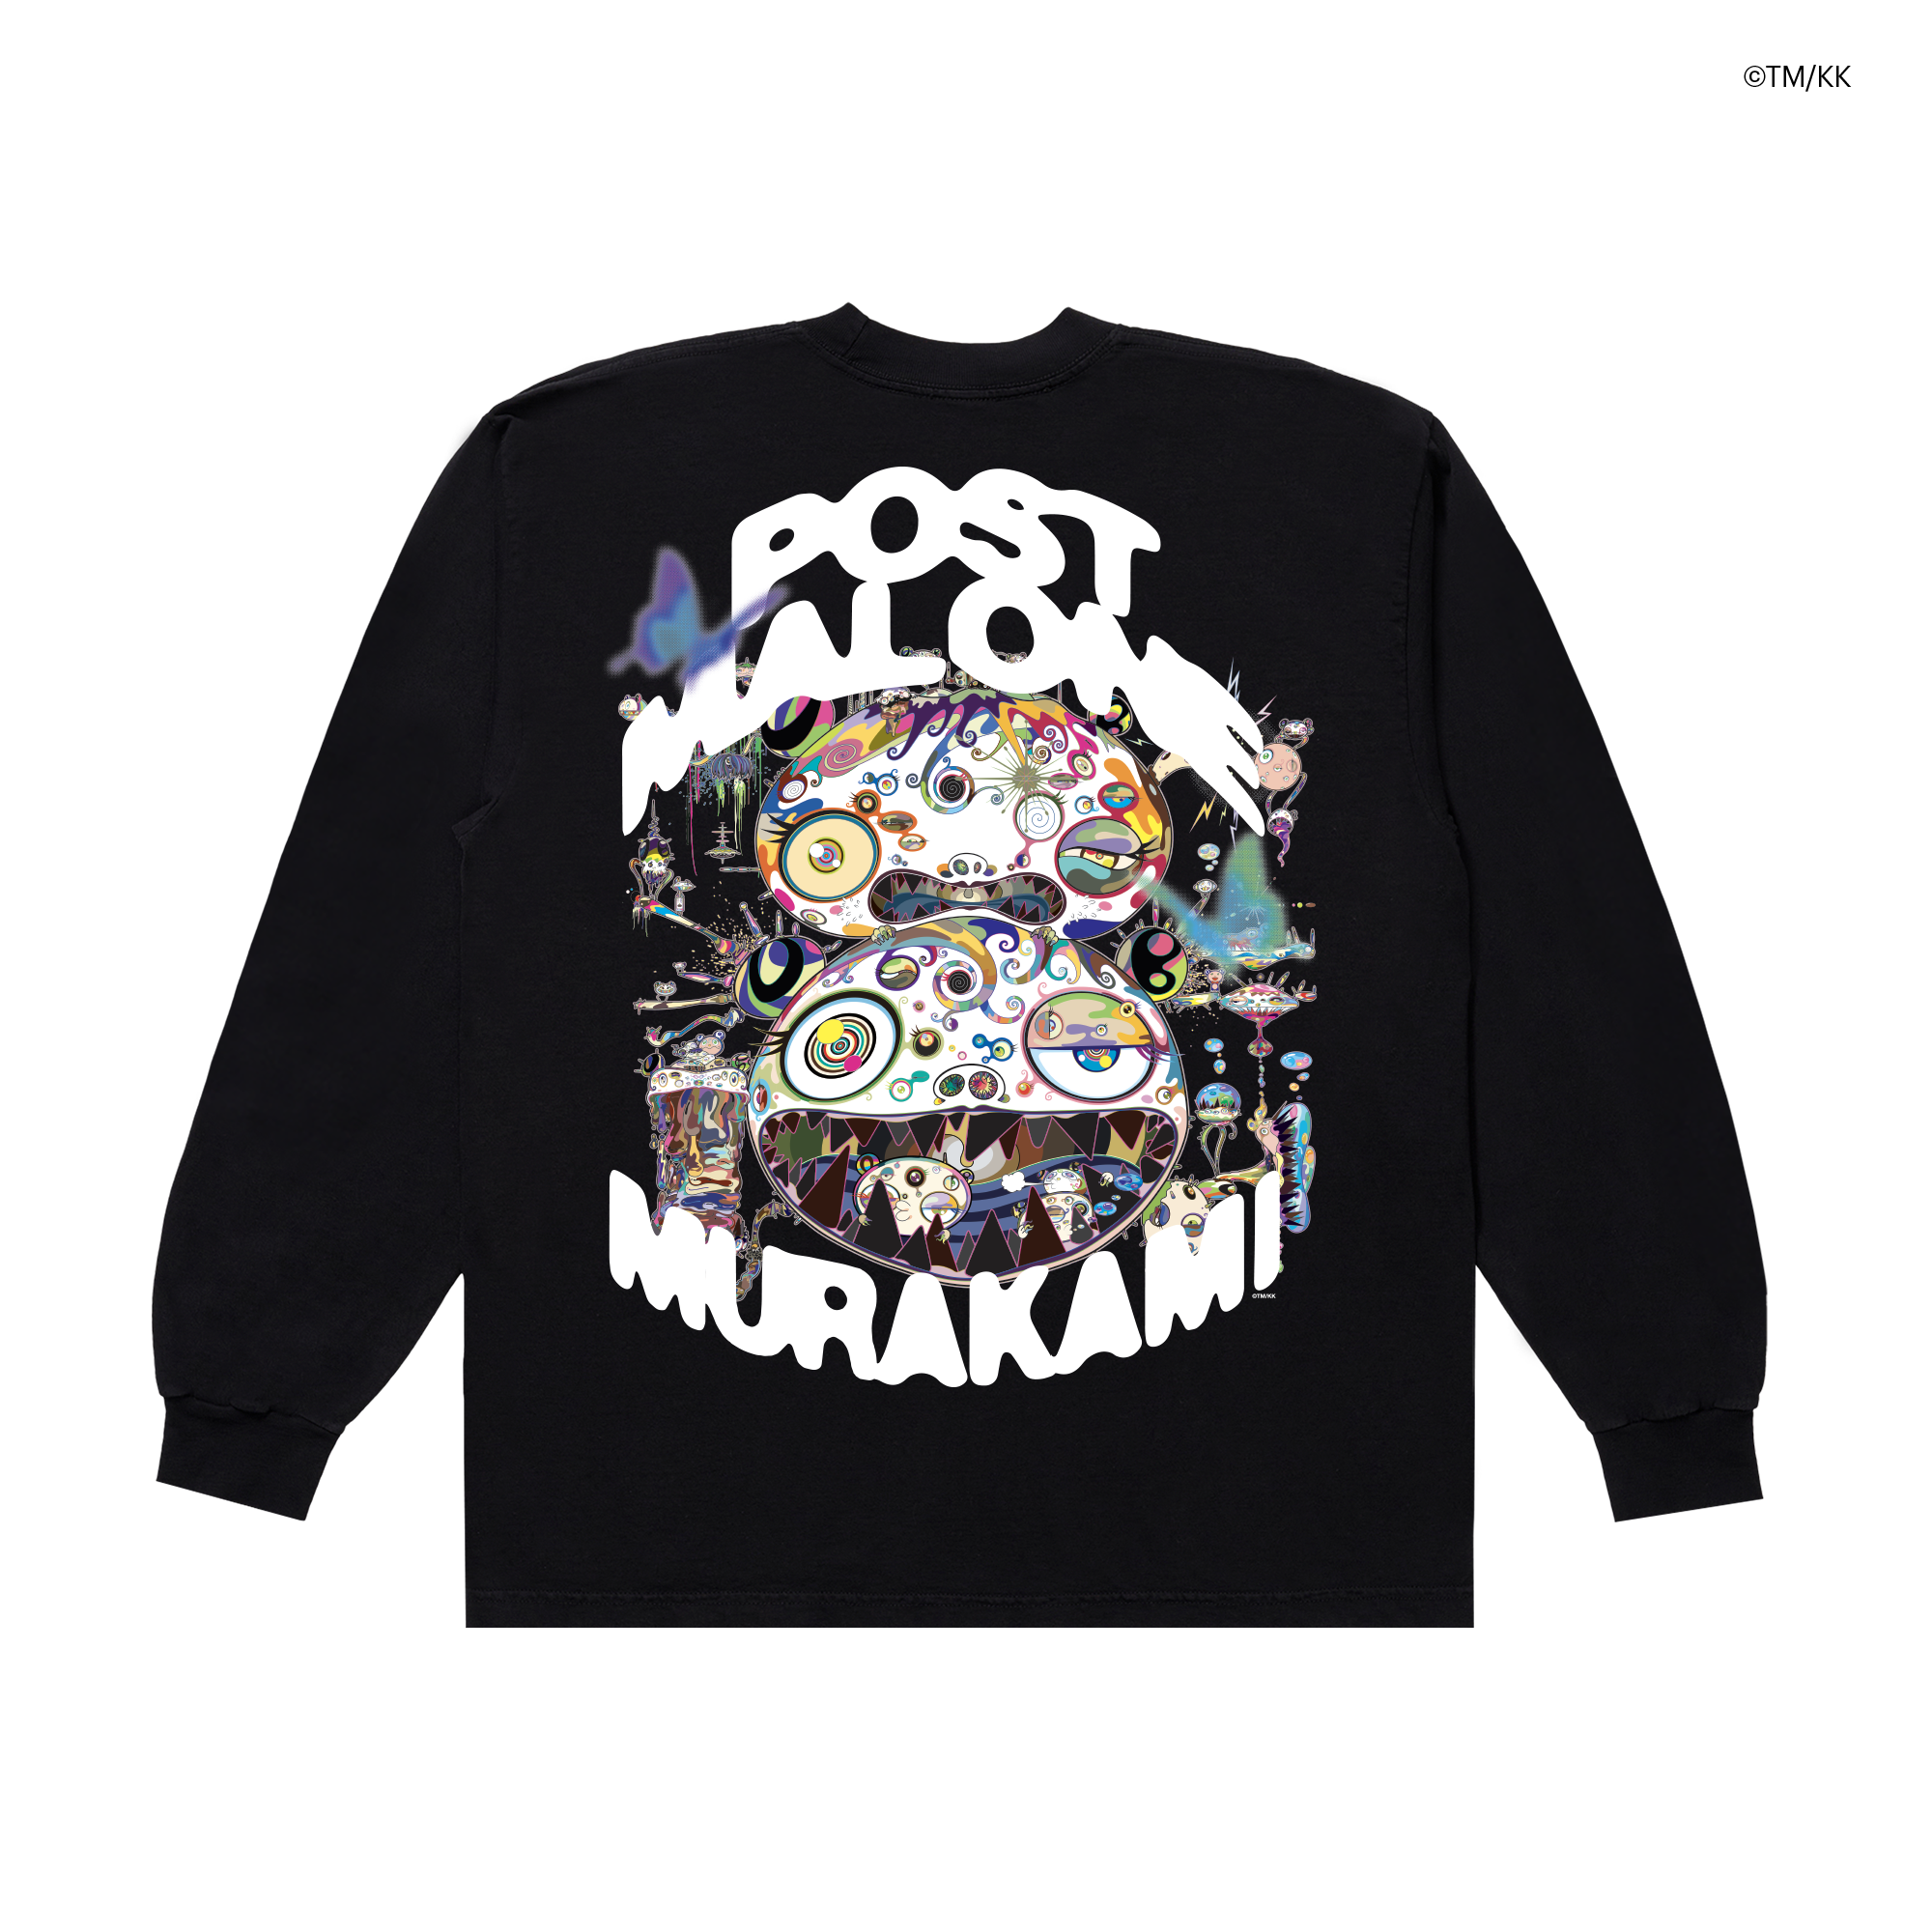 Takashi Murakami House T-Shirt Black/White Men's - SS20 - US